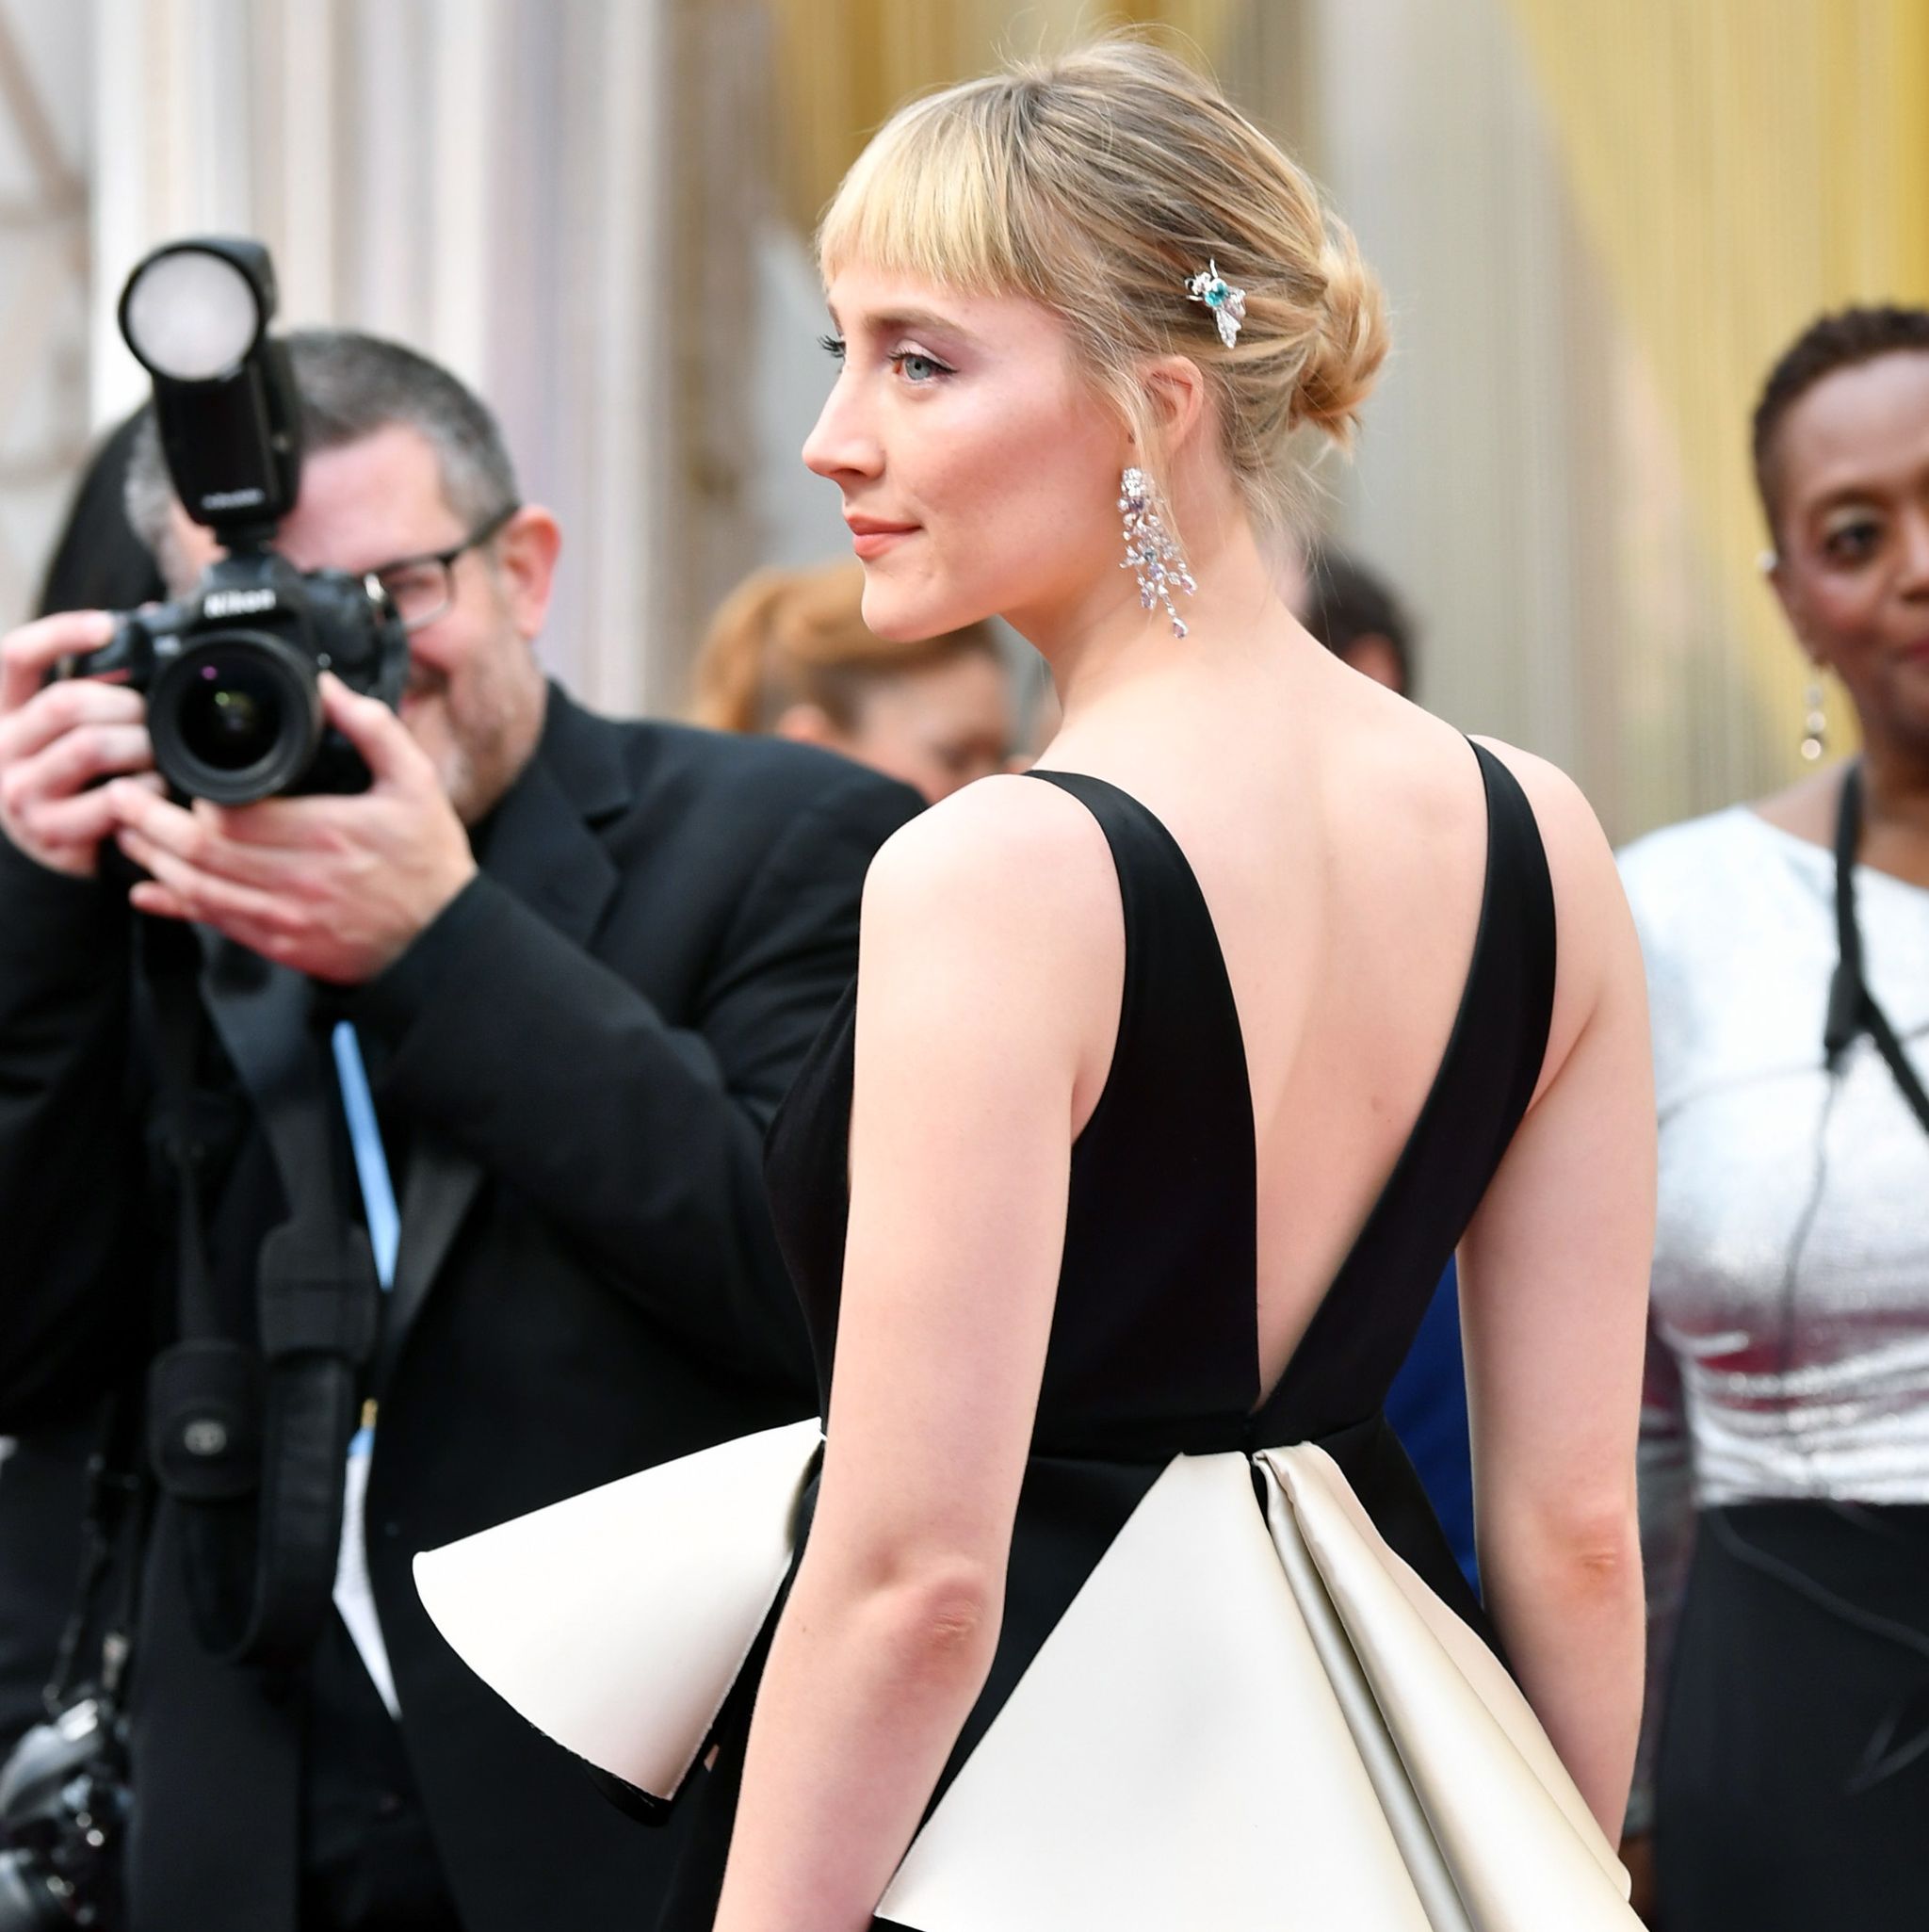 92nd Annual Academy Awards - Saoirse Ronan's new fringe at the 2020 Oscars